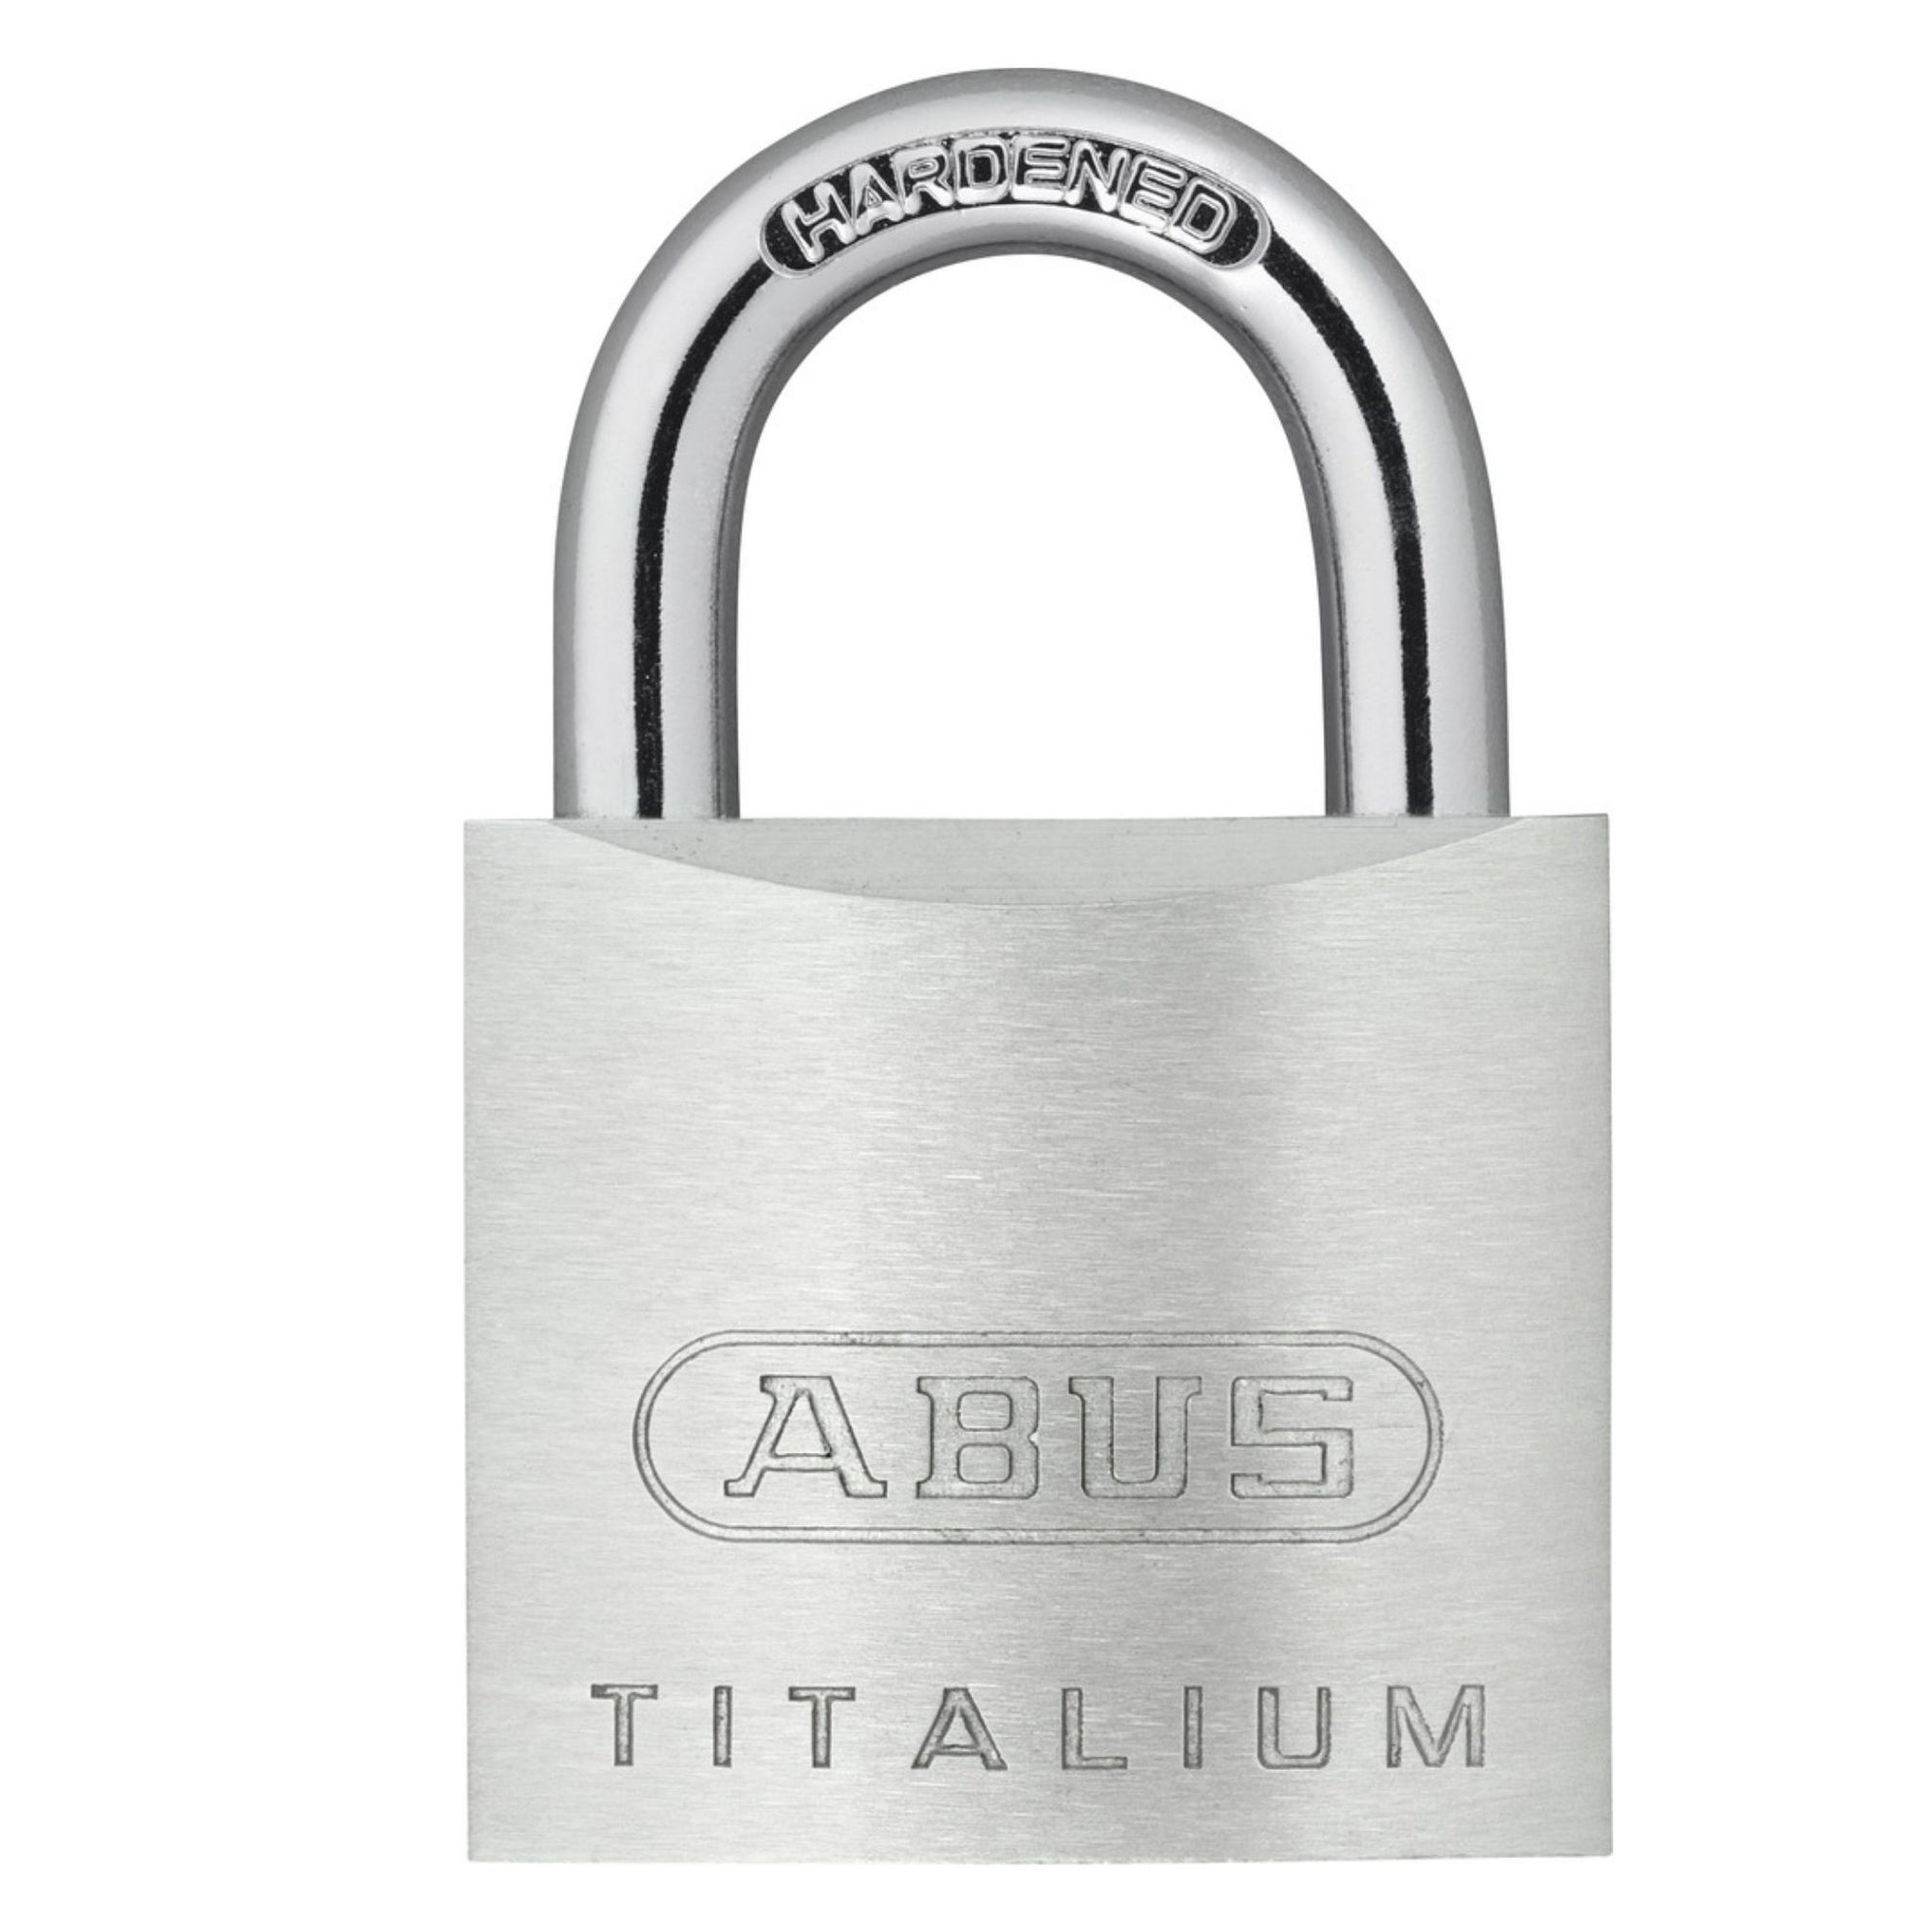 Abus 54TI/30 C KD Lock Keyed Different Titalium Padlocks Individually Carded for Retail Display - The Lock Source